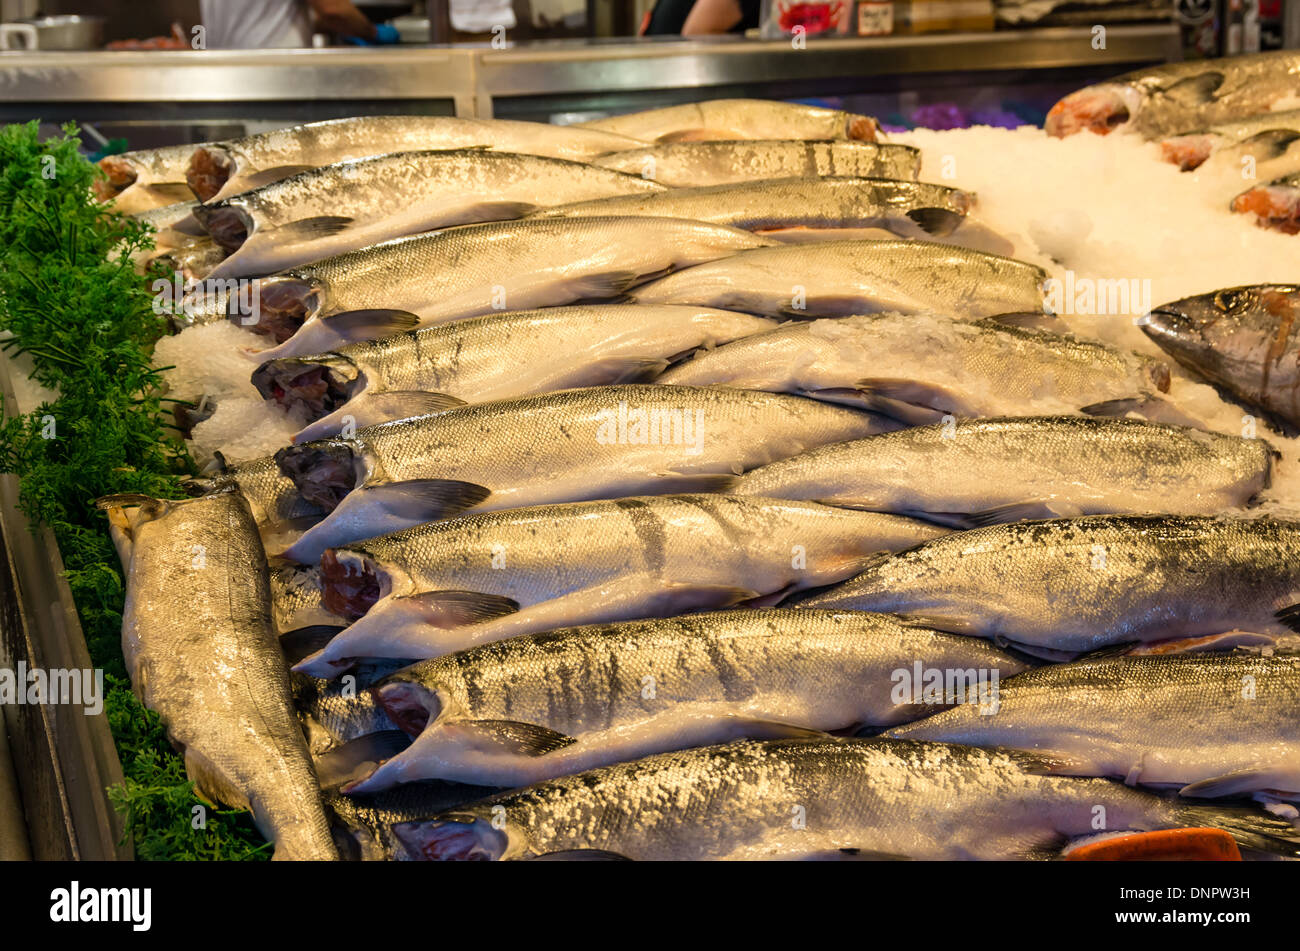 King Salmon on ice at a fish monger's market stall Pike Place Market Seattle, Washington, USA Stock Photo